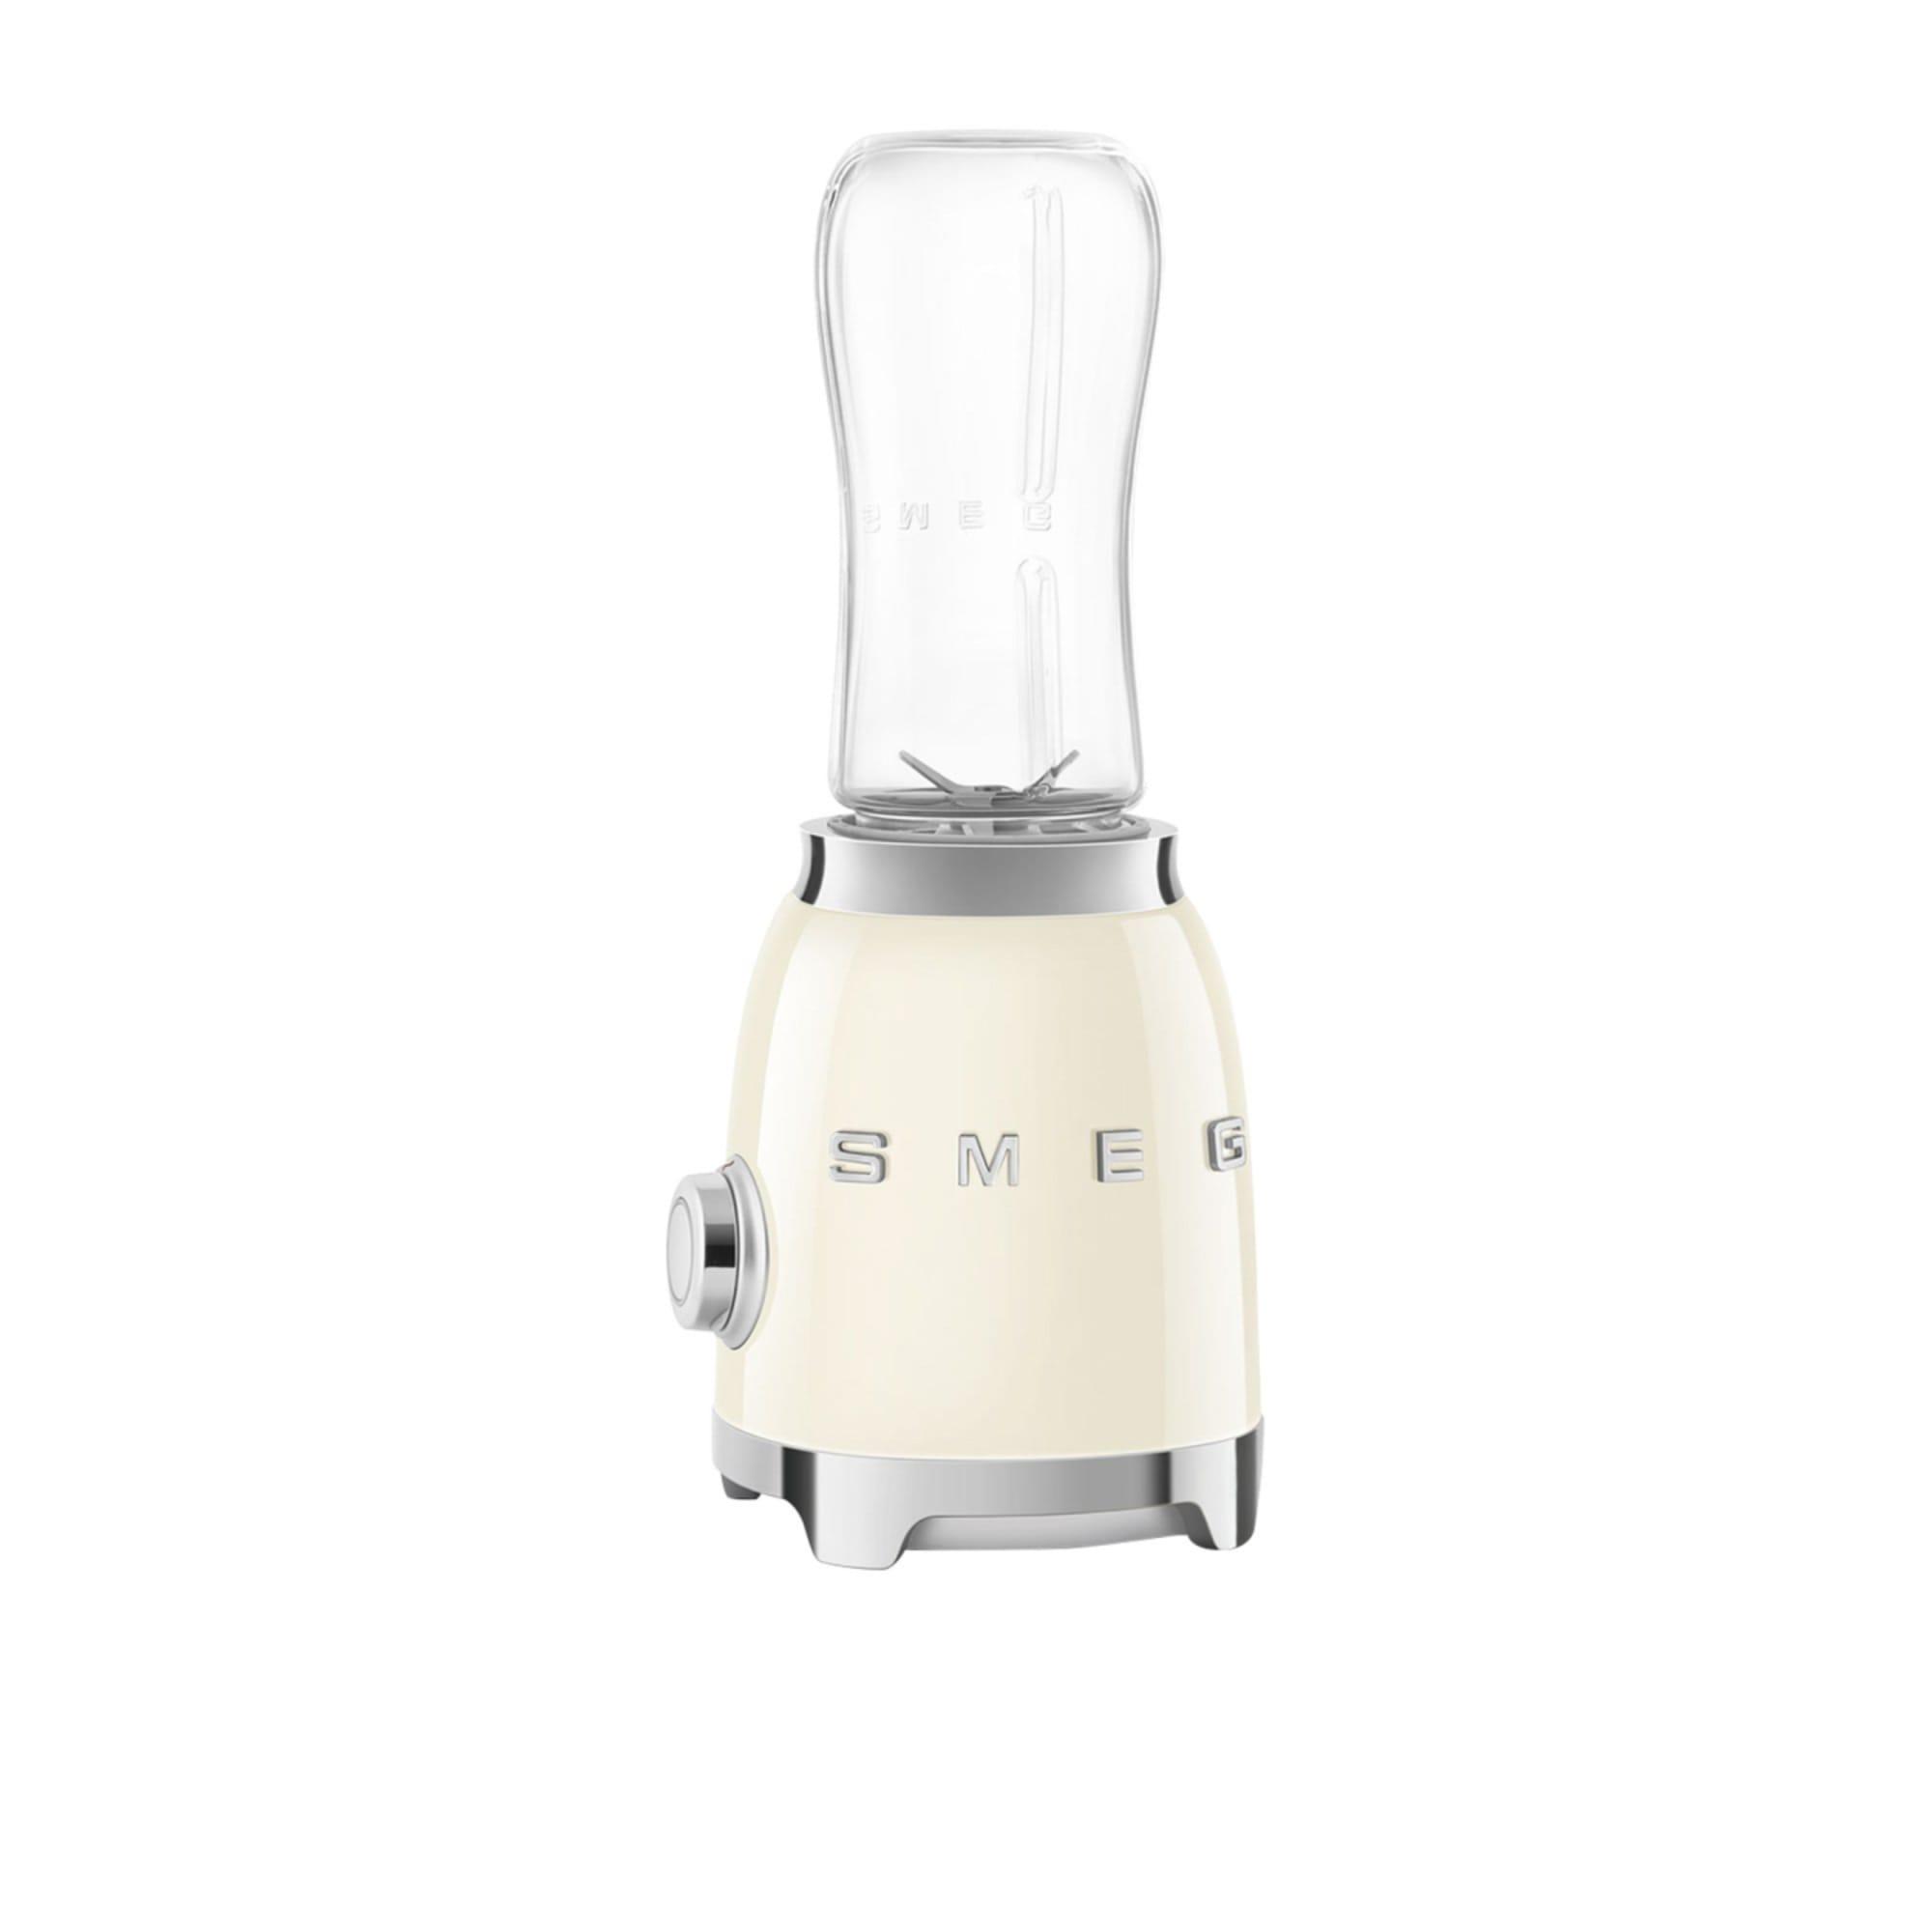 Smeg 50's Retro Style Mini Blender Cream Image 6